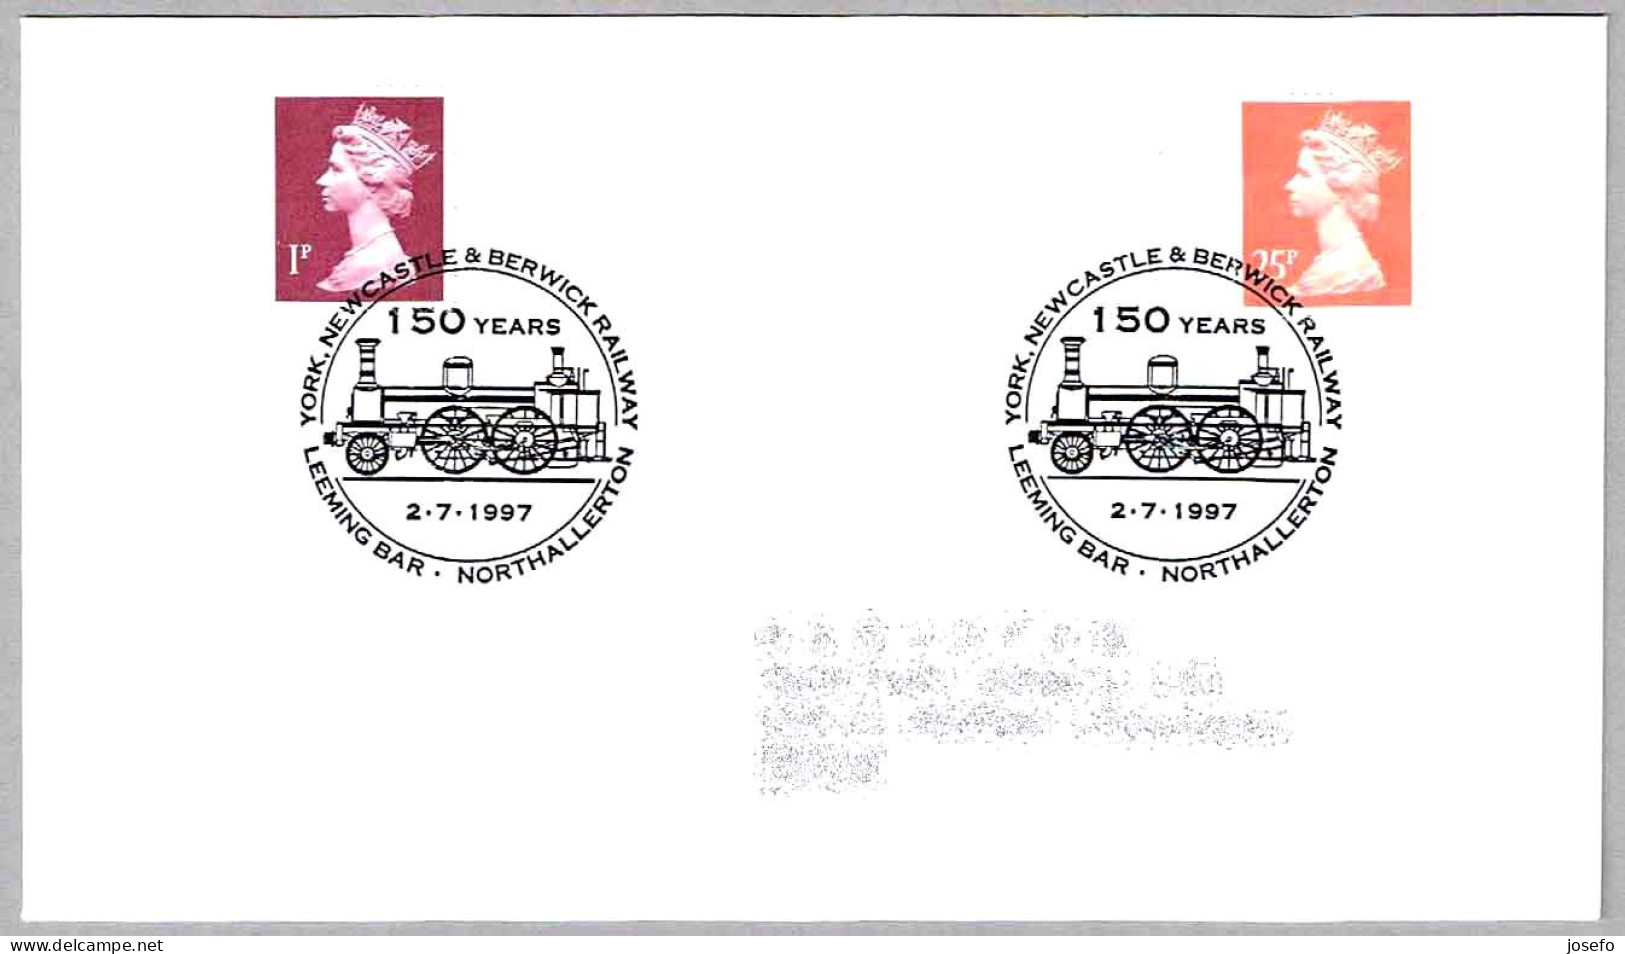 150 Years YORK, NEWCASTLE & BERWICK RAILWAY - Ferrocarril. Leeming Bar, Northallerton, 1997 - Trenes